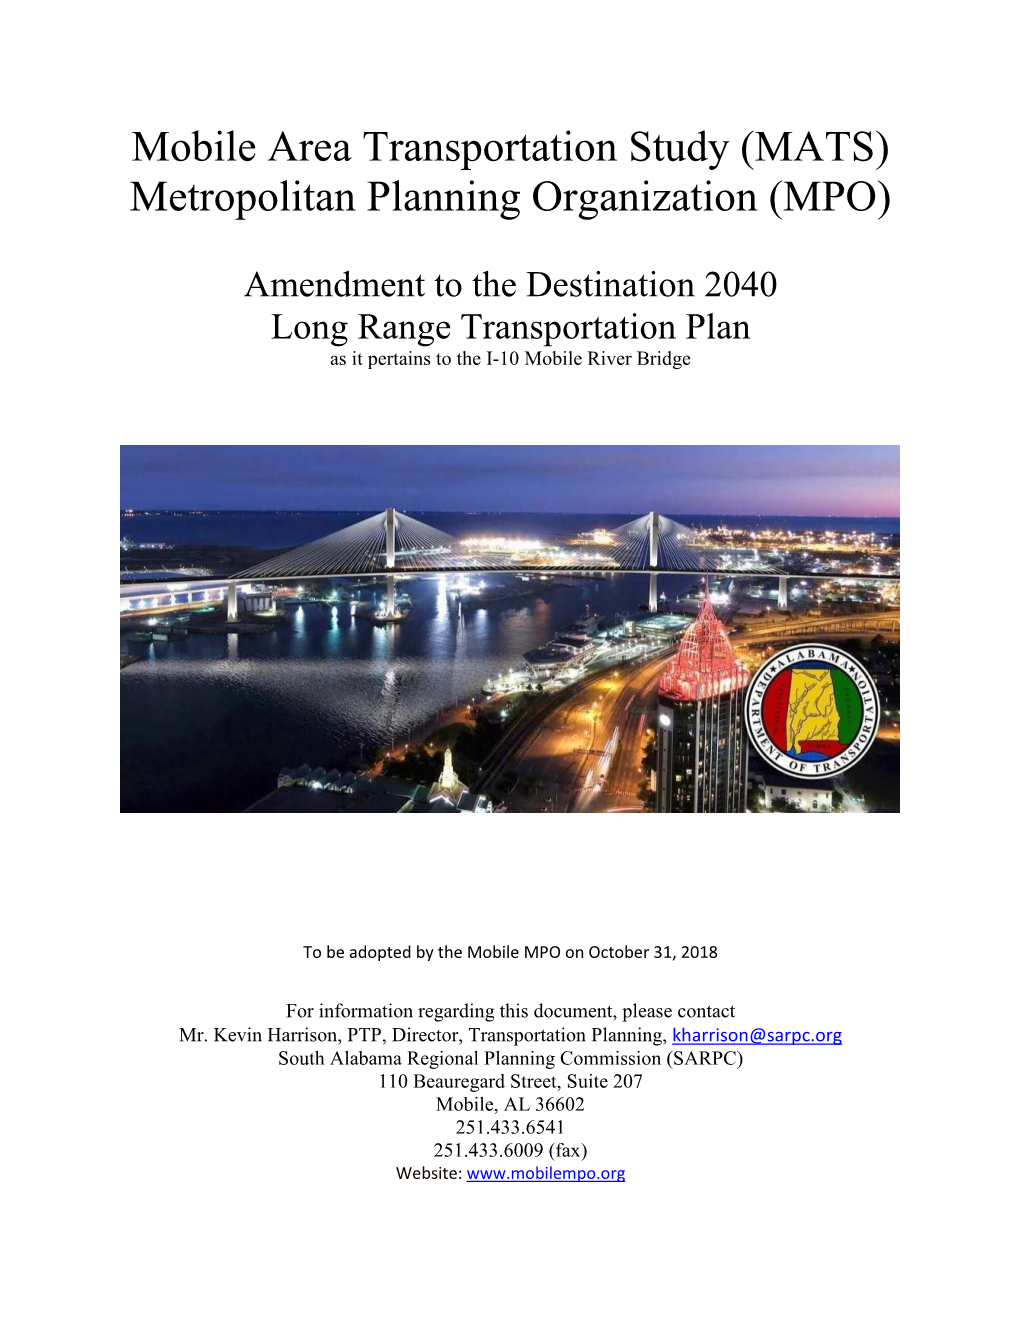 Mobile Area Transportation Study (MATS) Metropolitan Planning Organization (MPO)